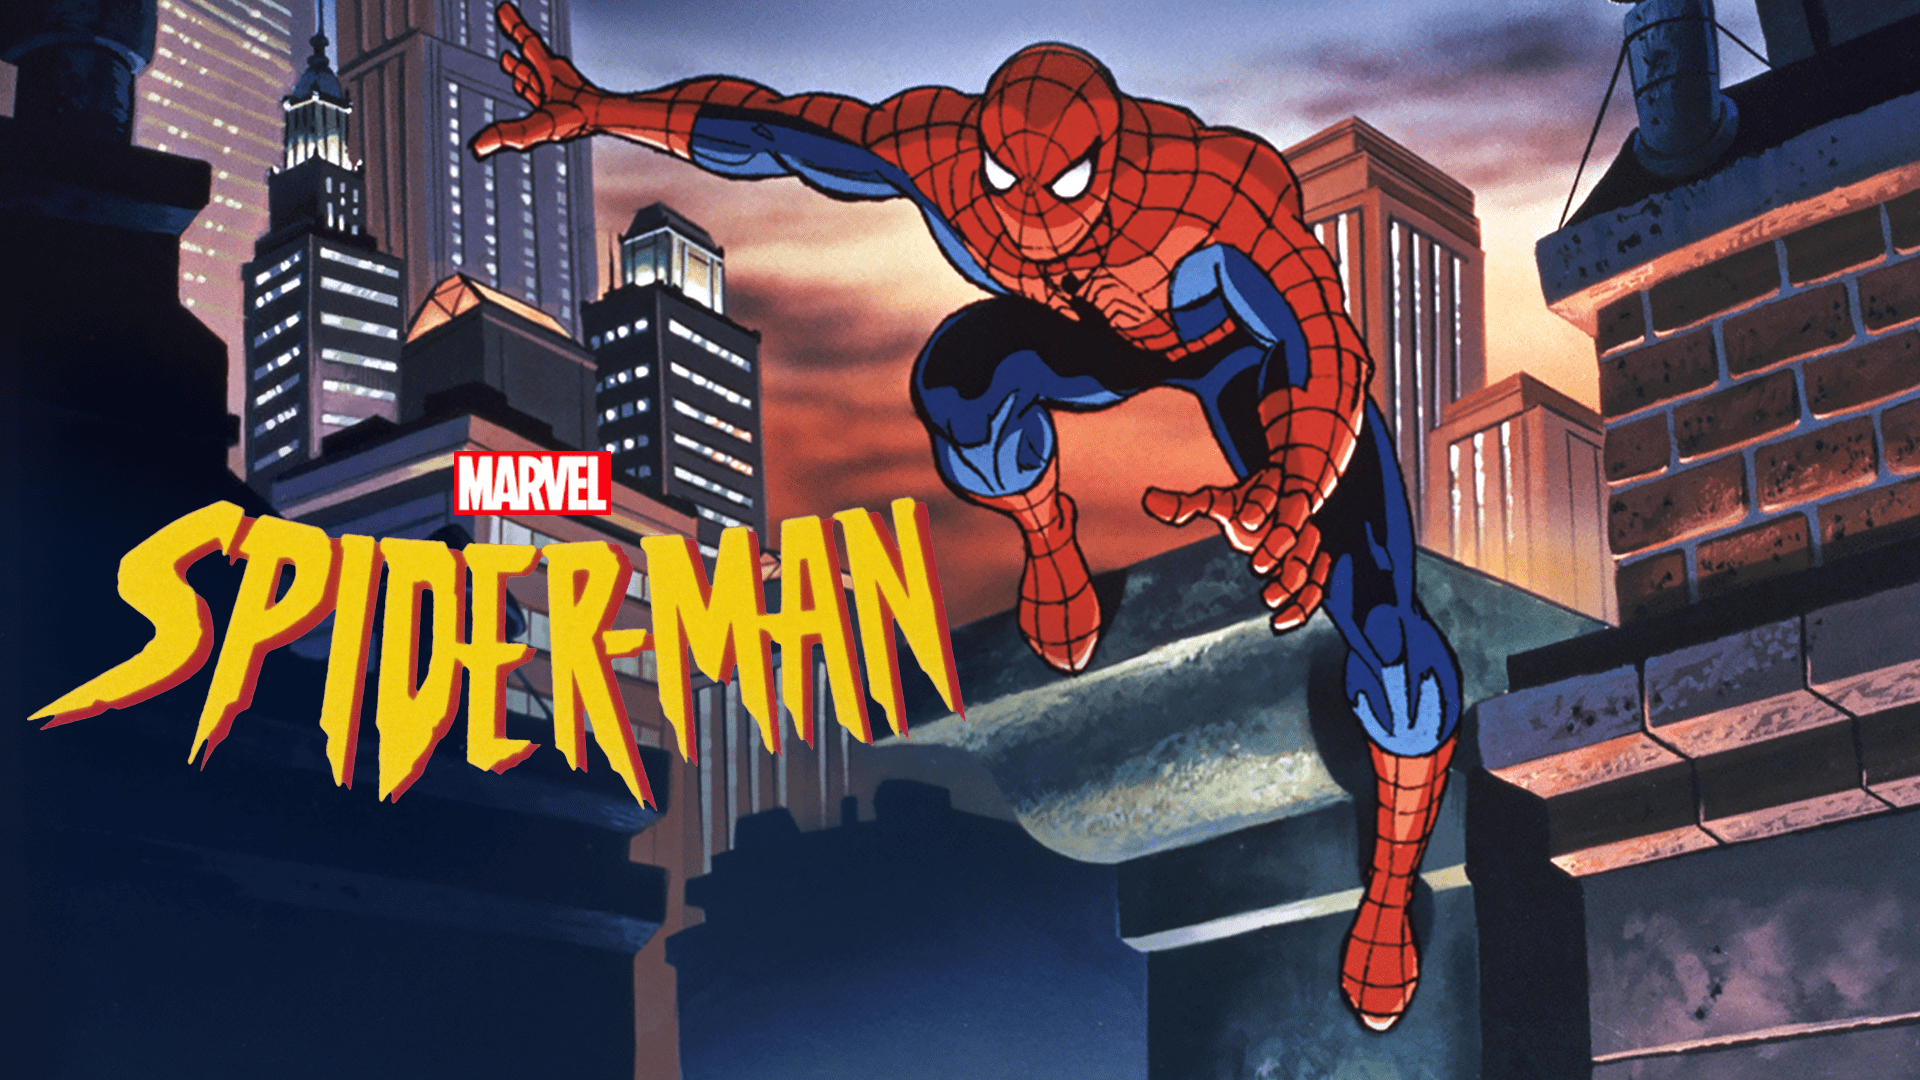 Spider man 1994. Паук мультика человек паук 1994. Человек паук 1994 616